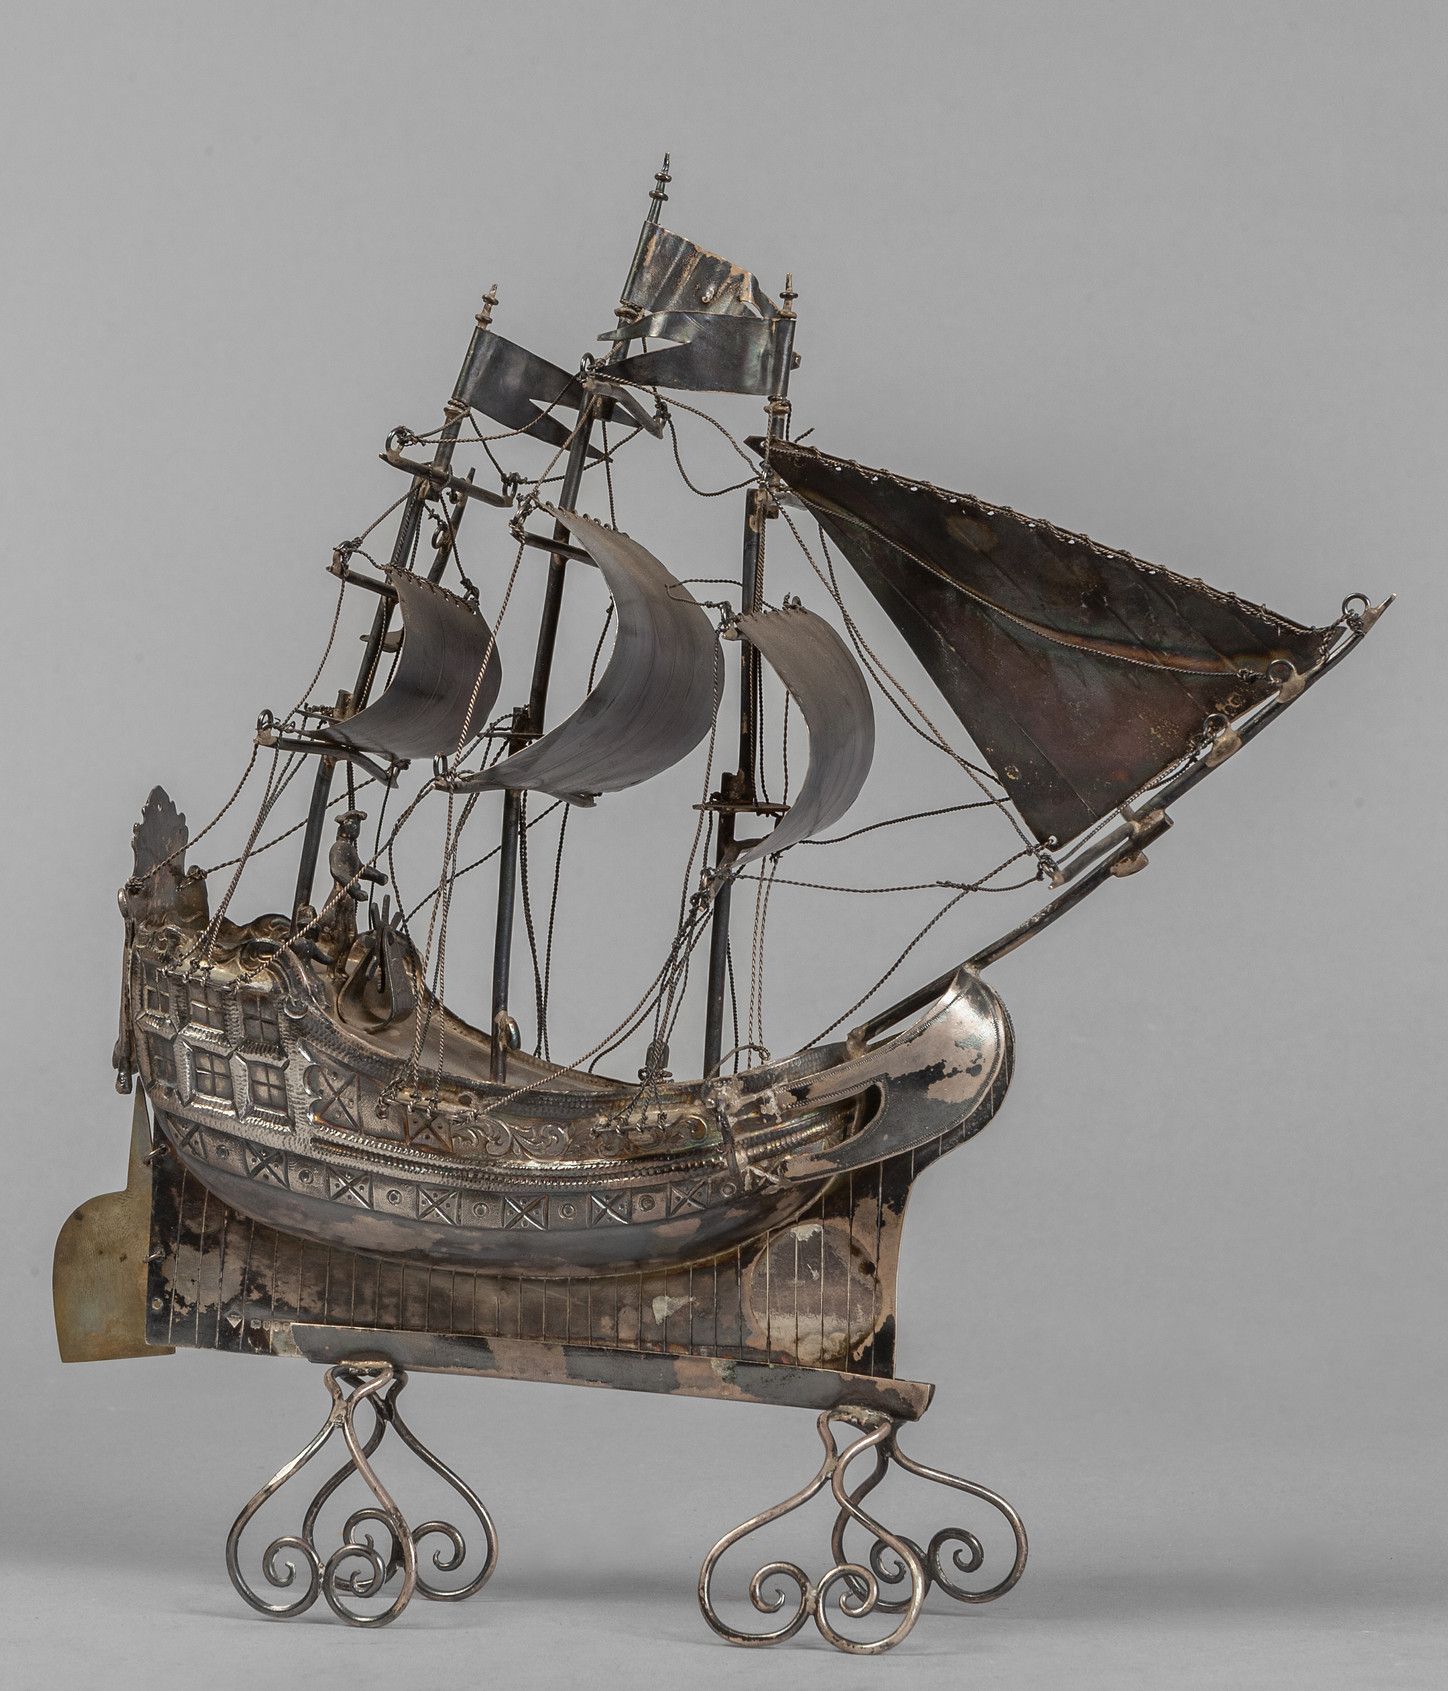 OGGETTISTICA (-) 物品 (-)
小型大帆船模型，德国 19世纪
cm.25x9xh.25, gr.358